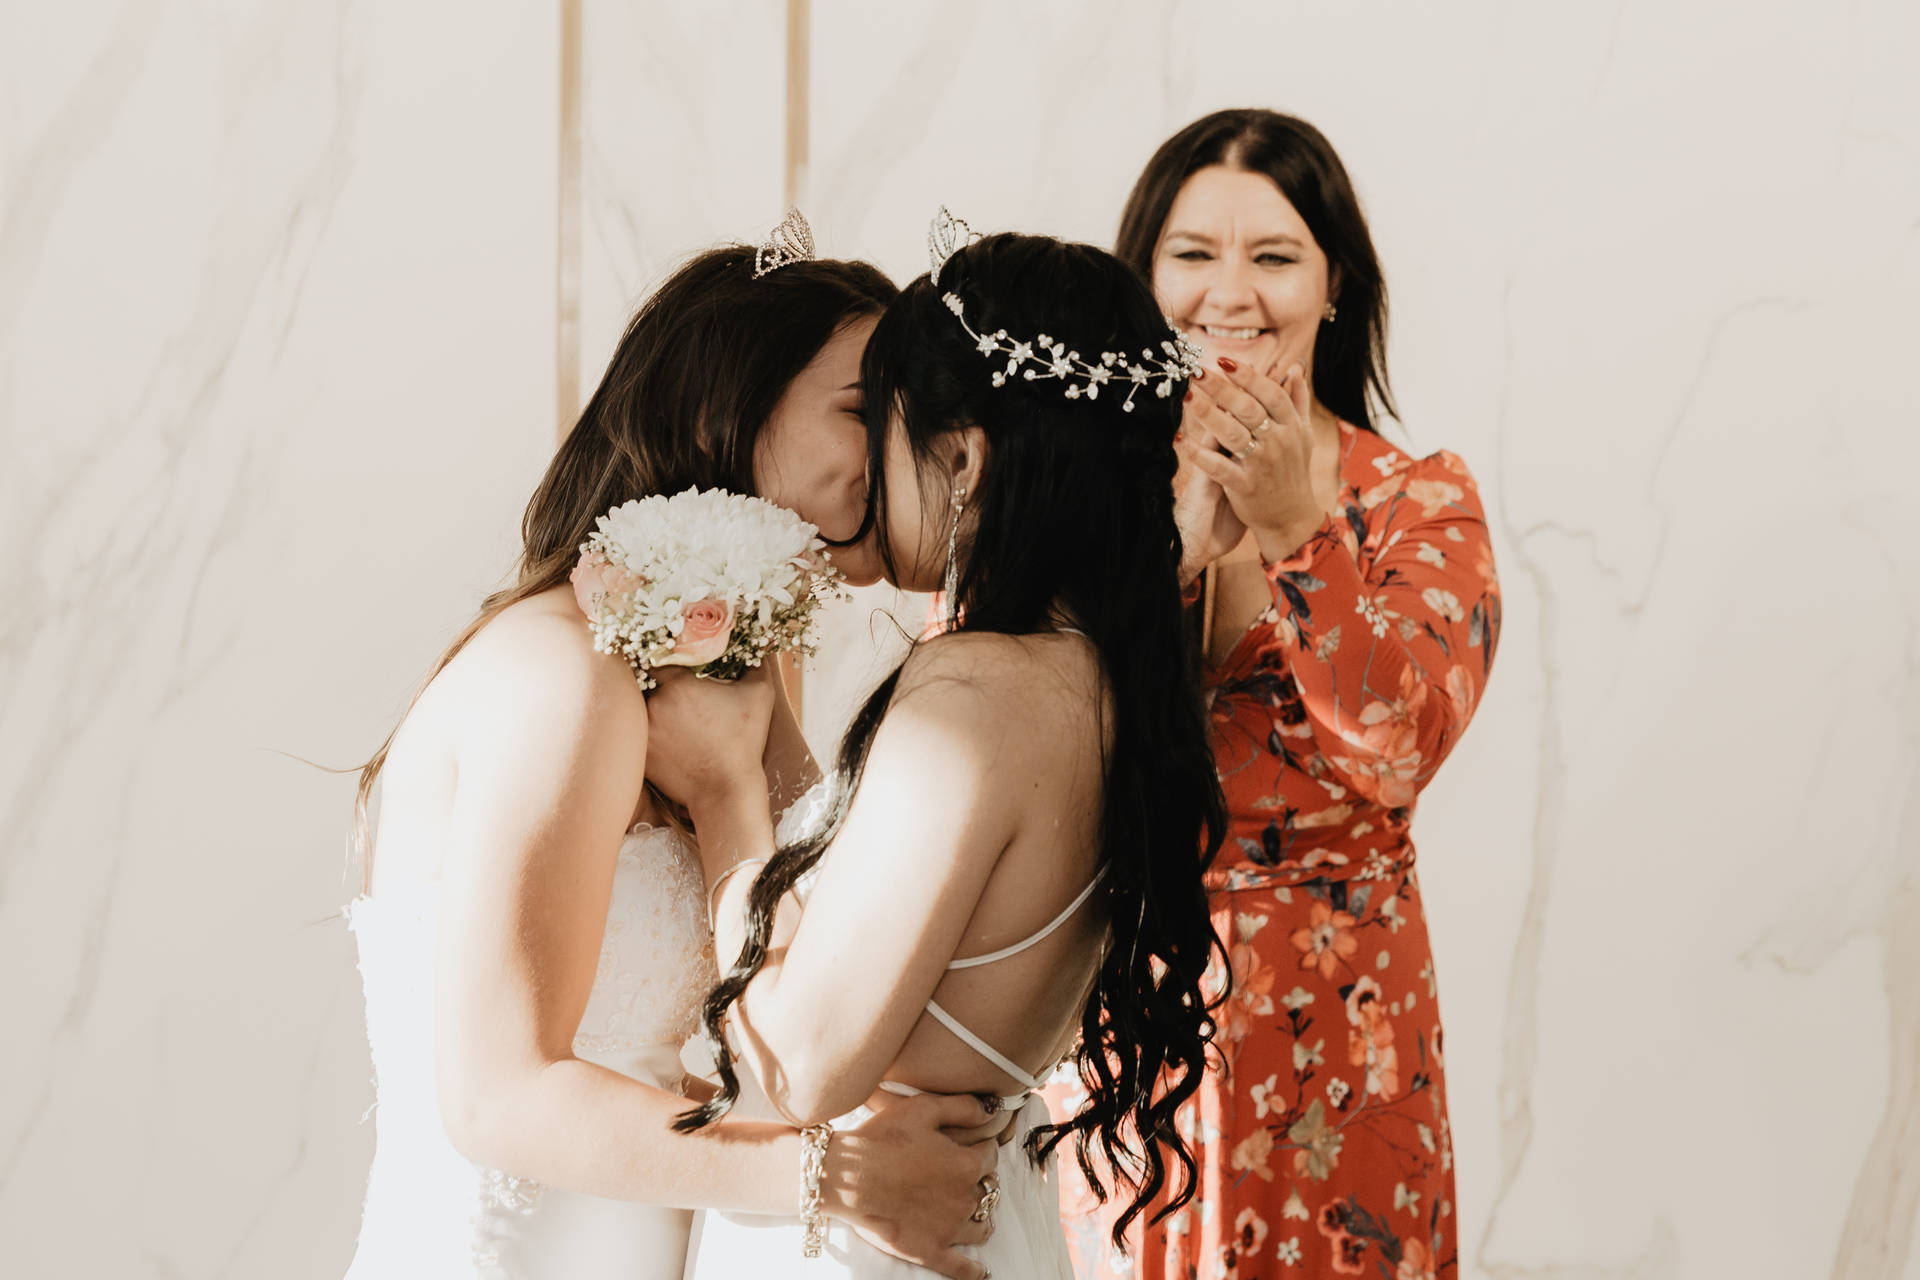 Lesbian Wedding Kiss Background